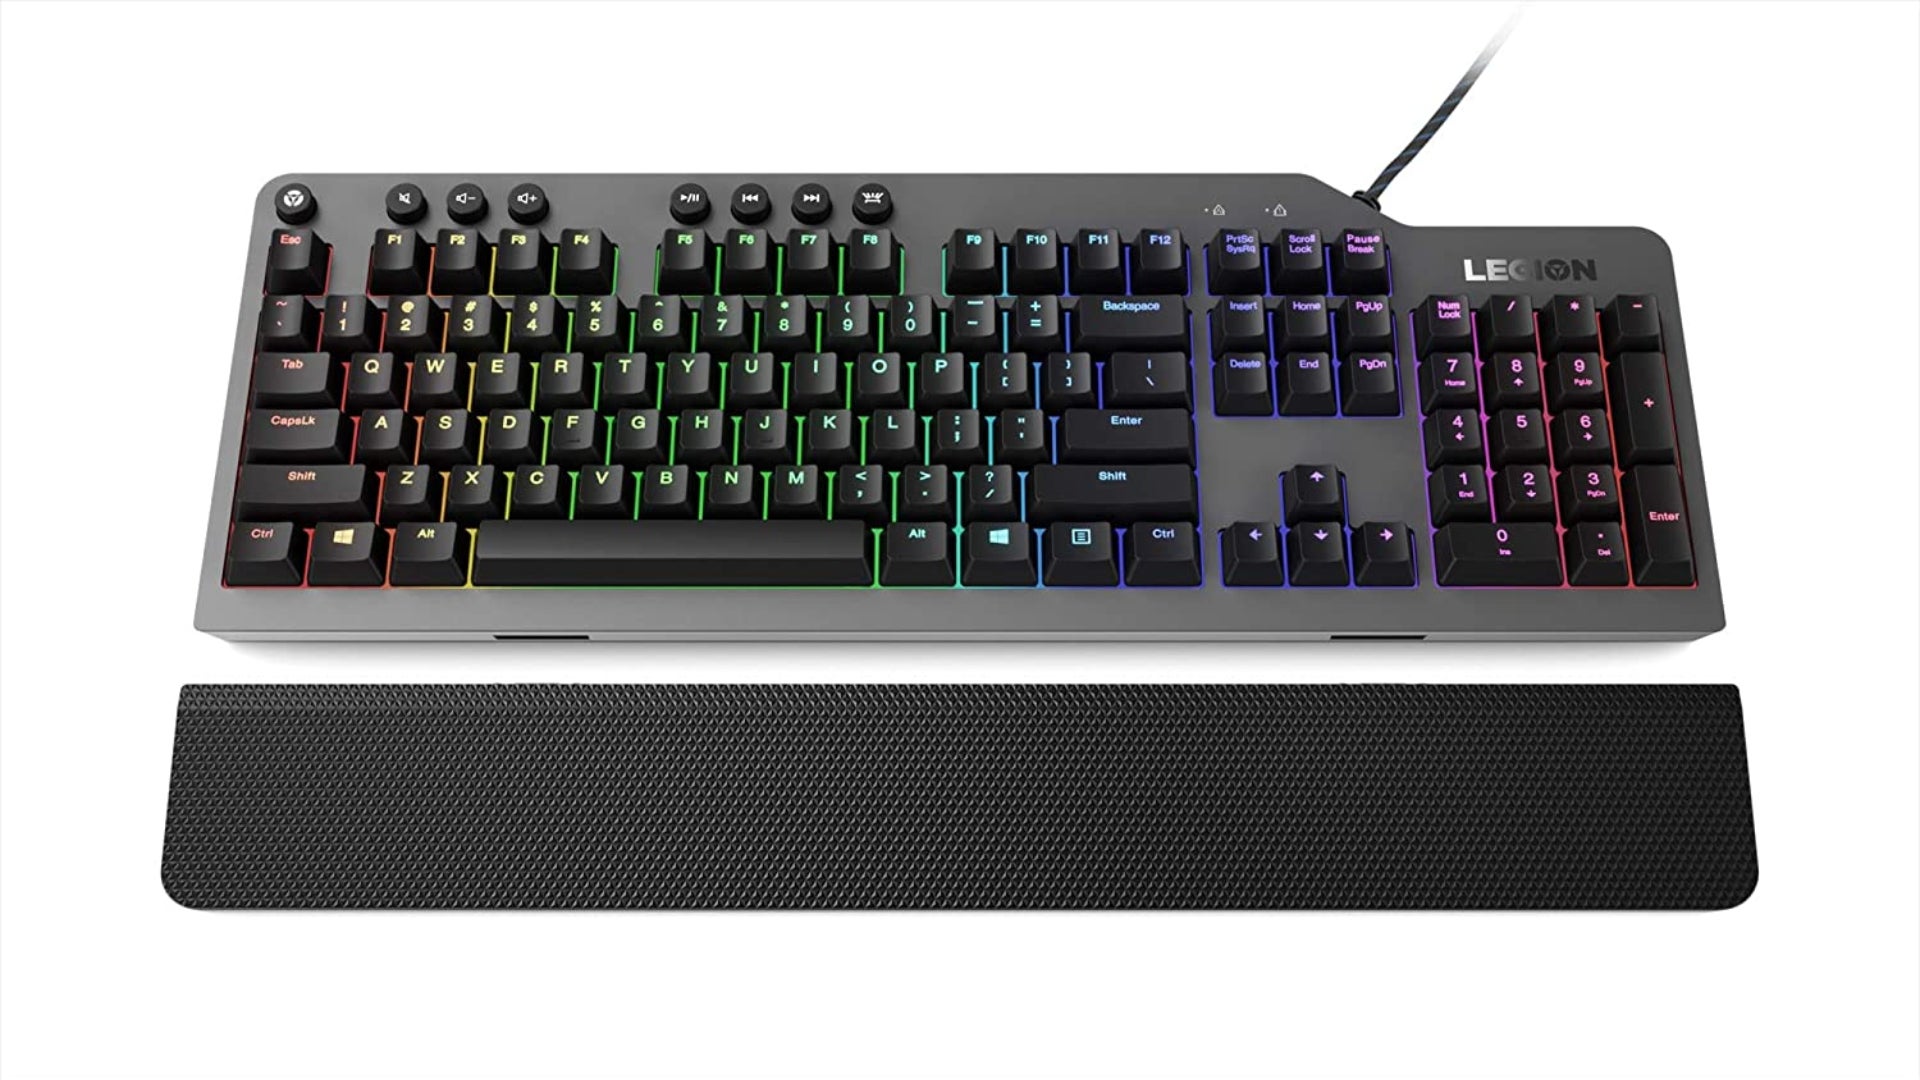 Image for Get the Lenovo Legion K500 mechanical gaming keyboard for half price